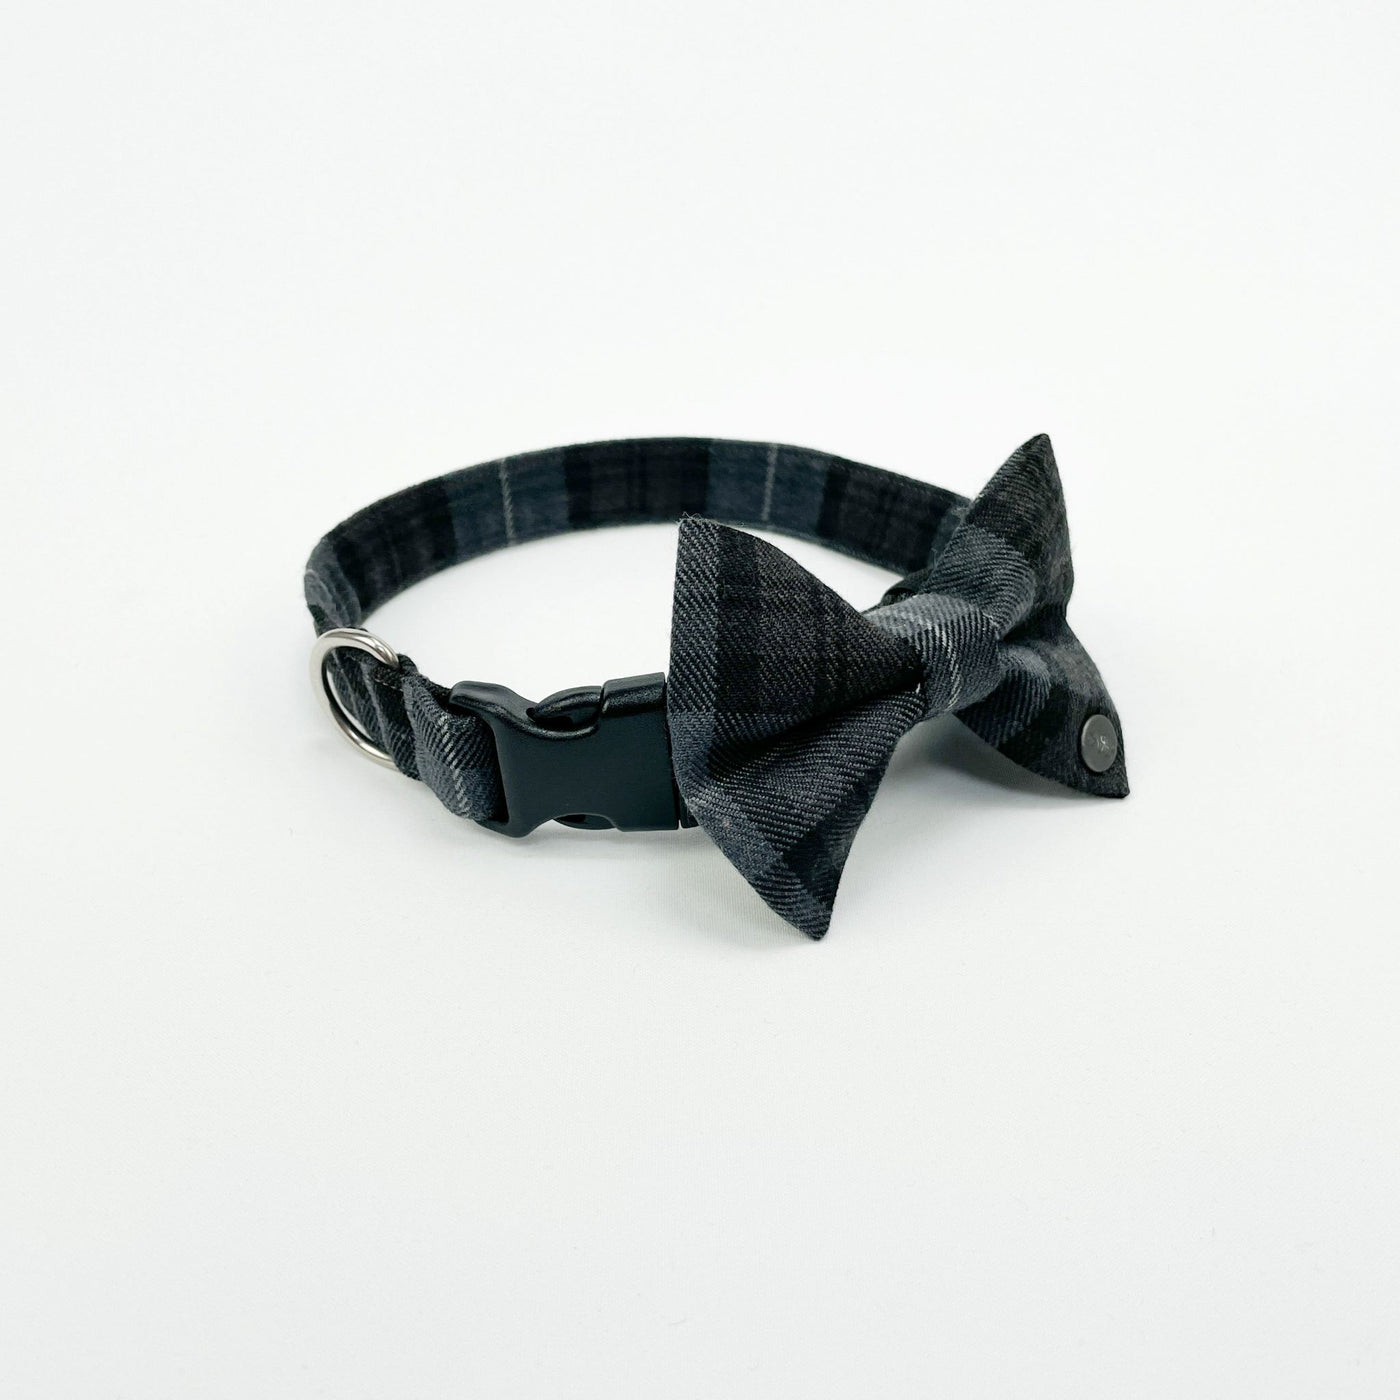 Charcoal grey tartan dog collar with matching dog bow tie